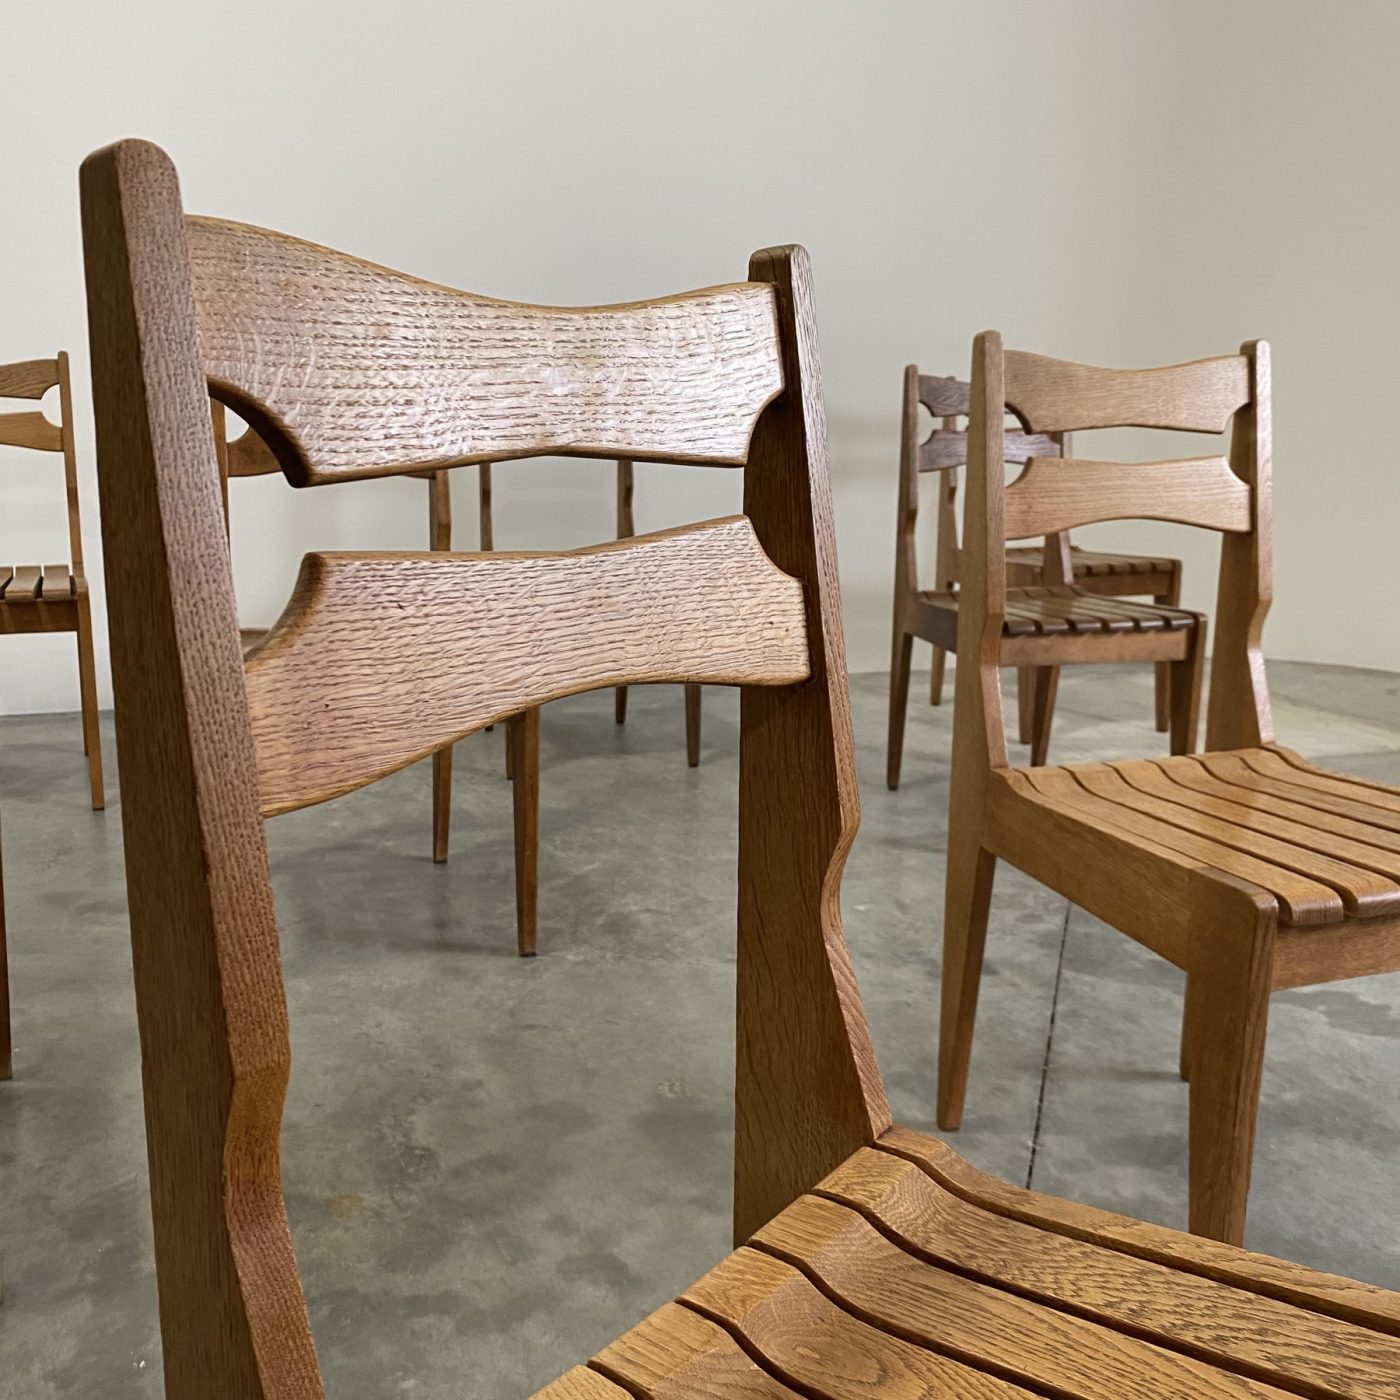 objet-vagabond-reconstruction-chairs0005